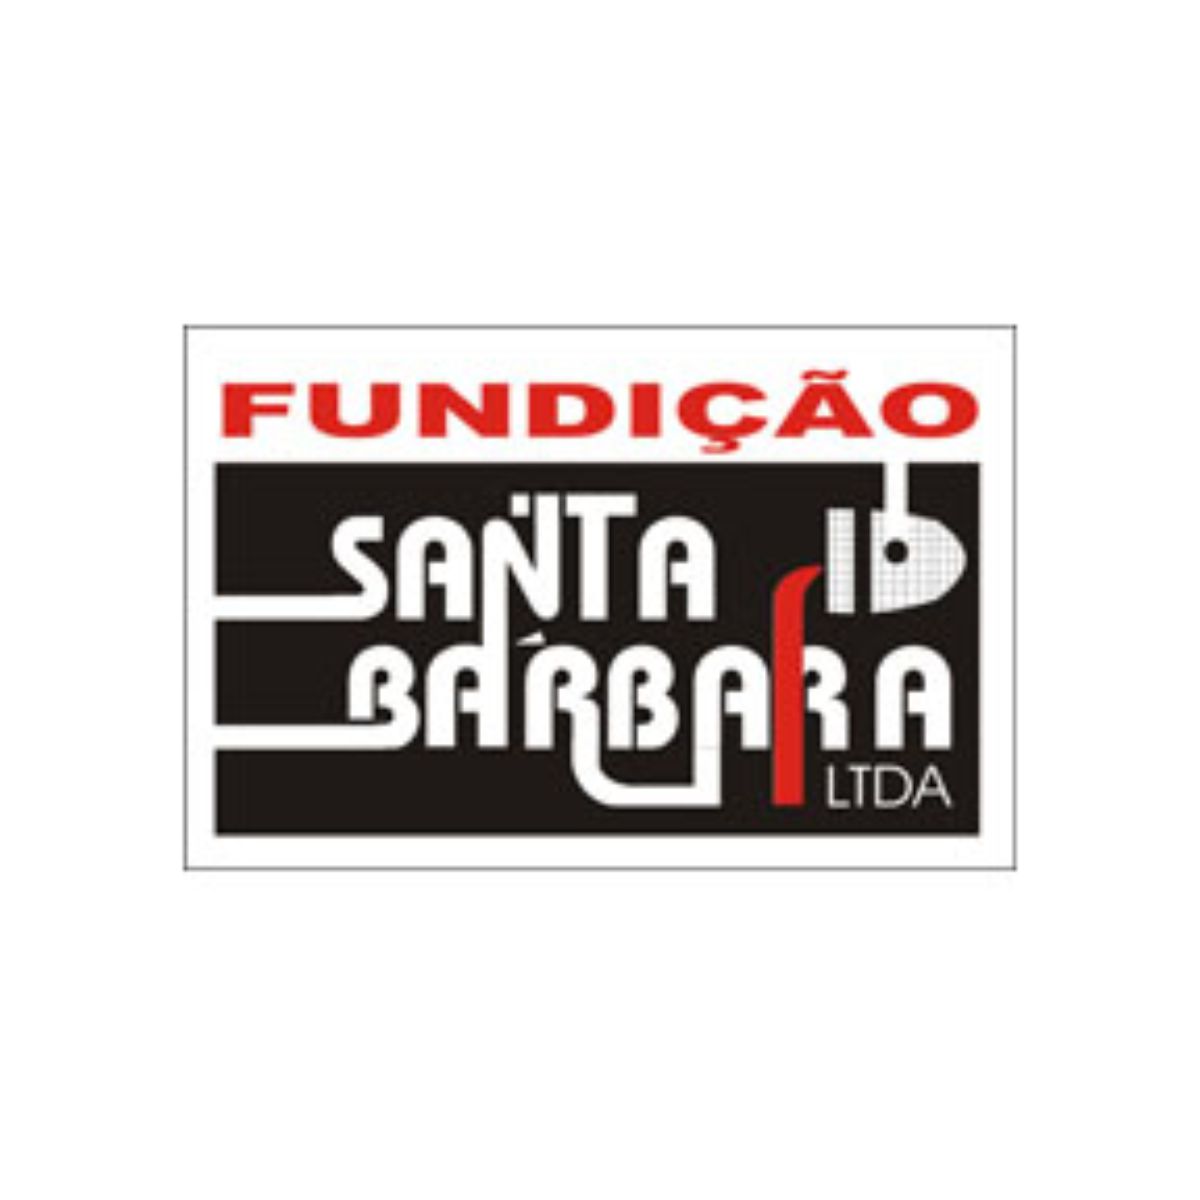 Fundição Santa Bárbara Ltda